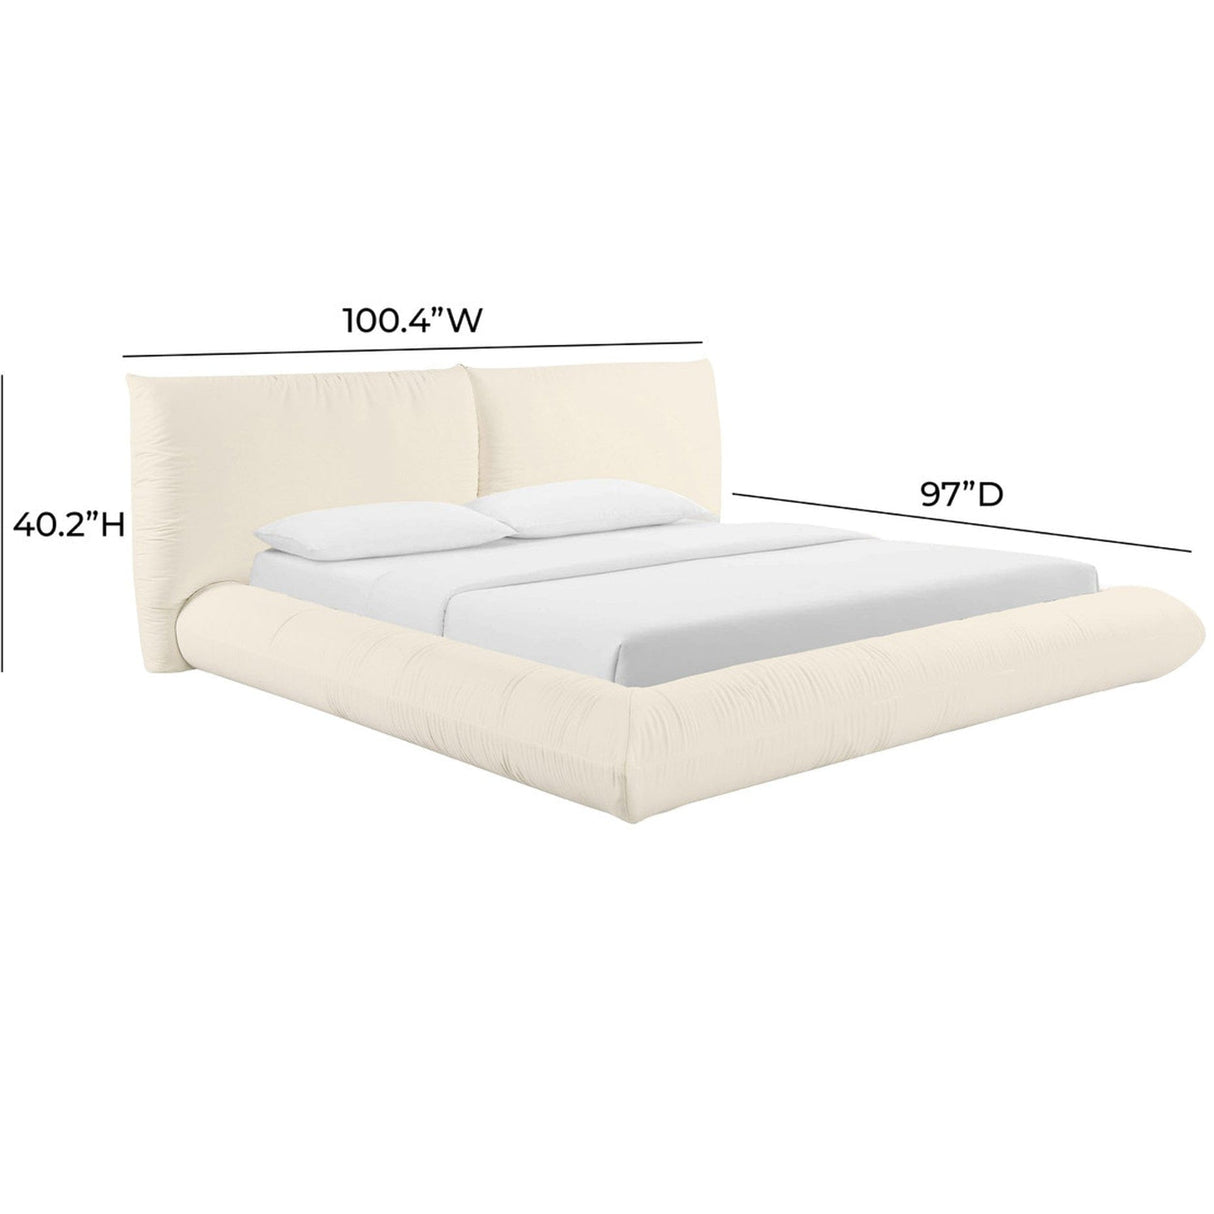 Candelabra Home Romp Cream 100% Upcycled Linen Bed Beds & Bed Frames